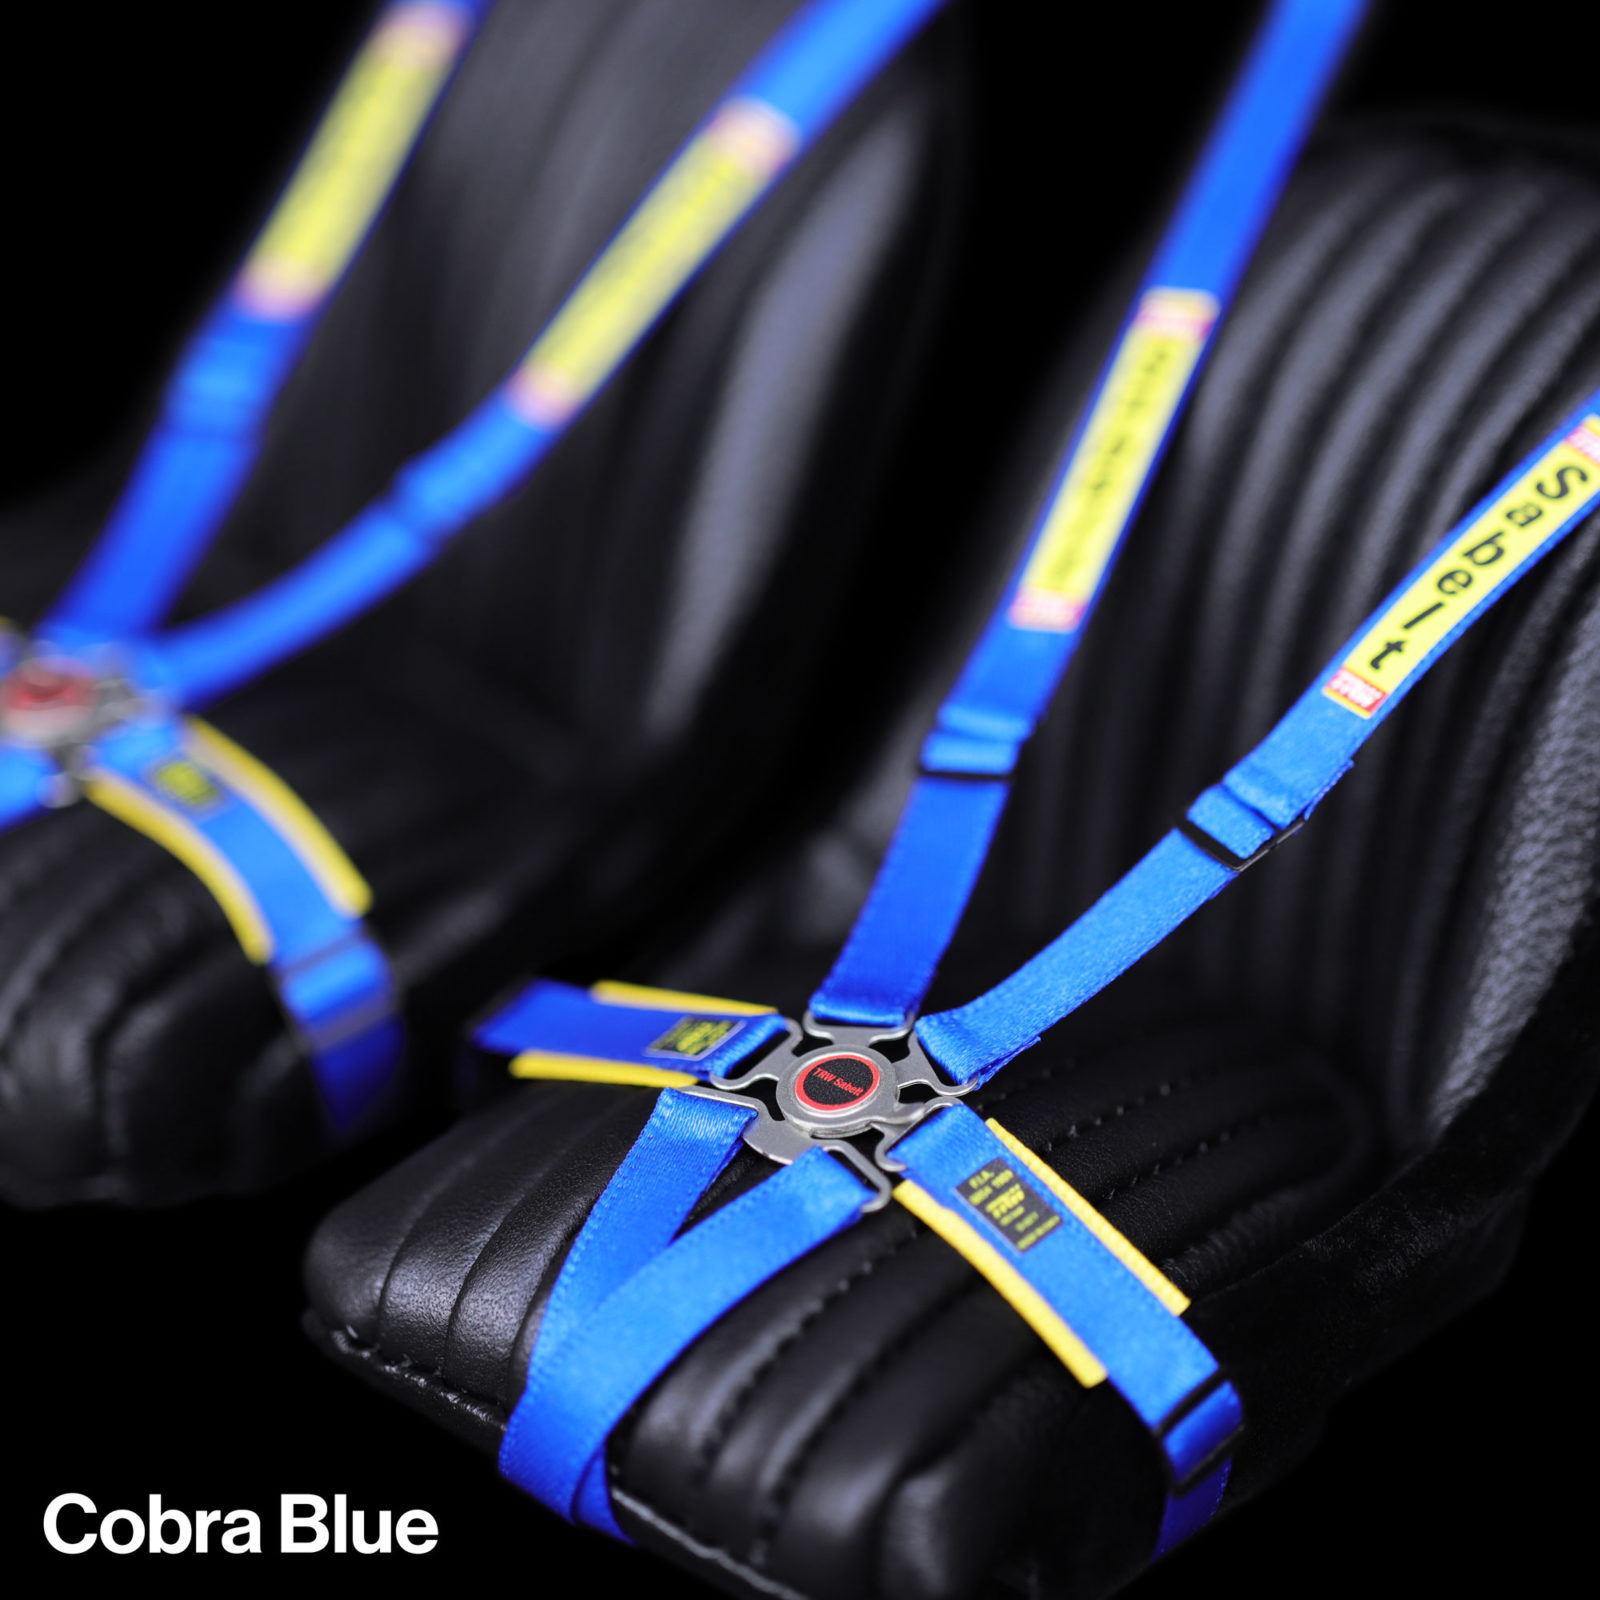 Cobra Blue Sabelt Harness for Ferrari F40 model